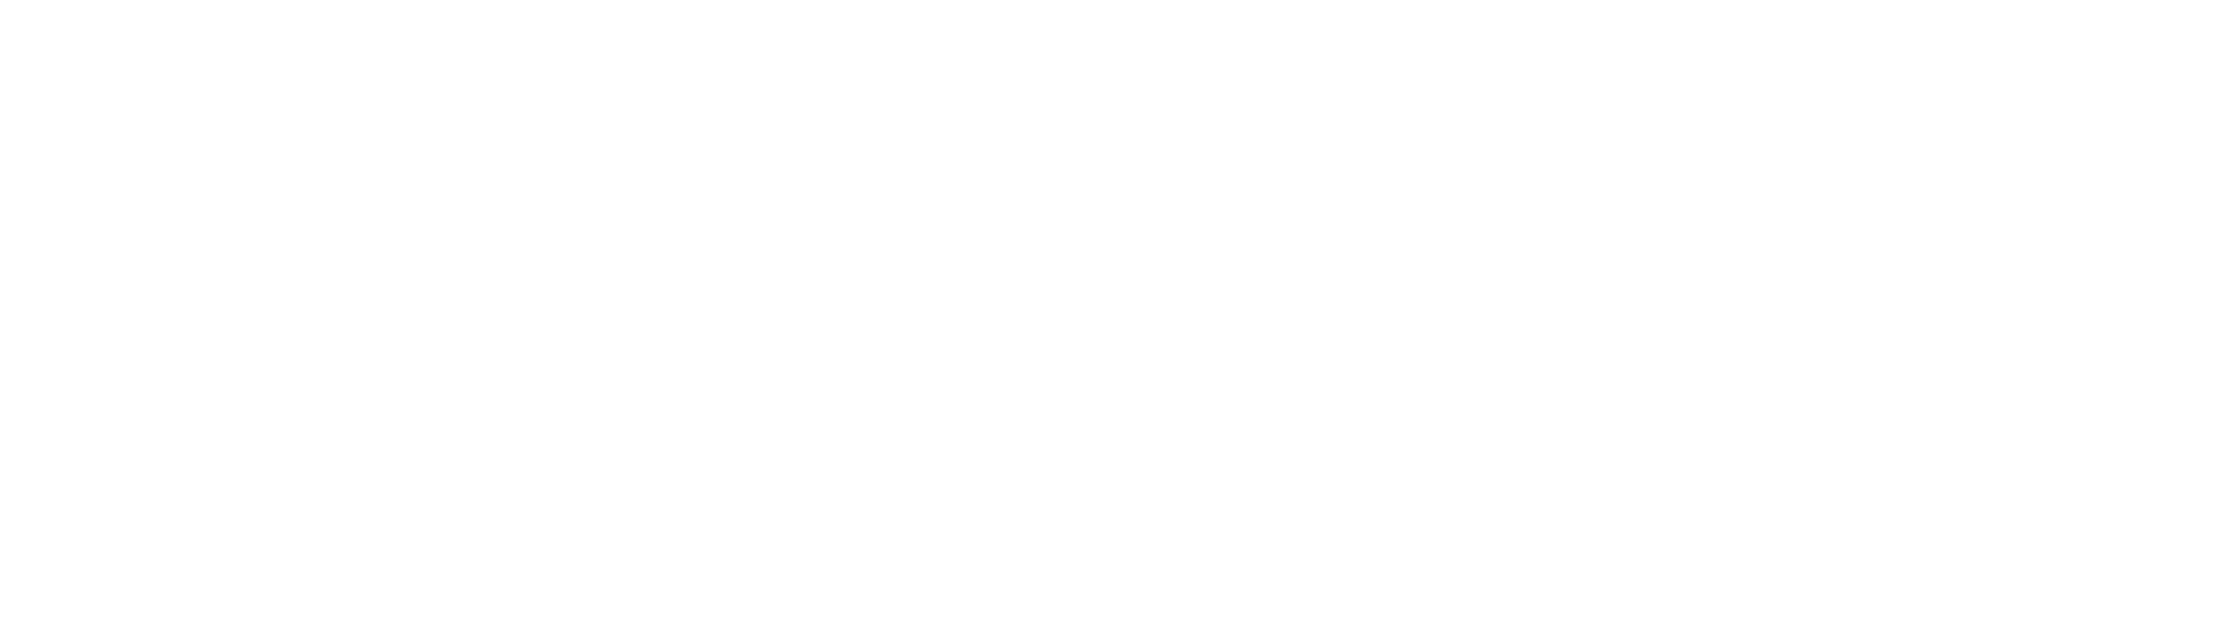 The lite Rails Logo; the header.